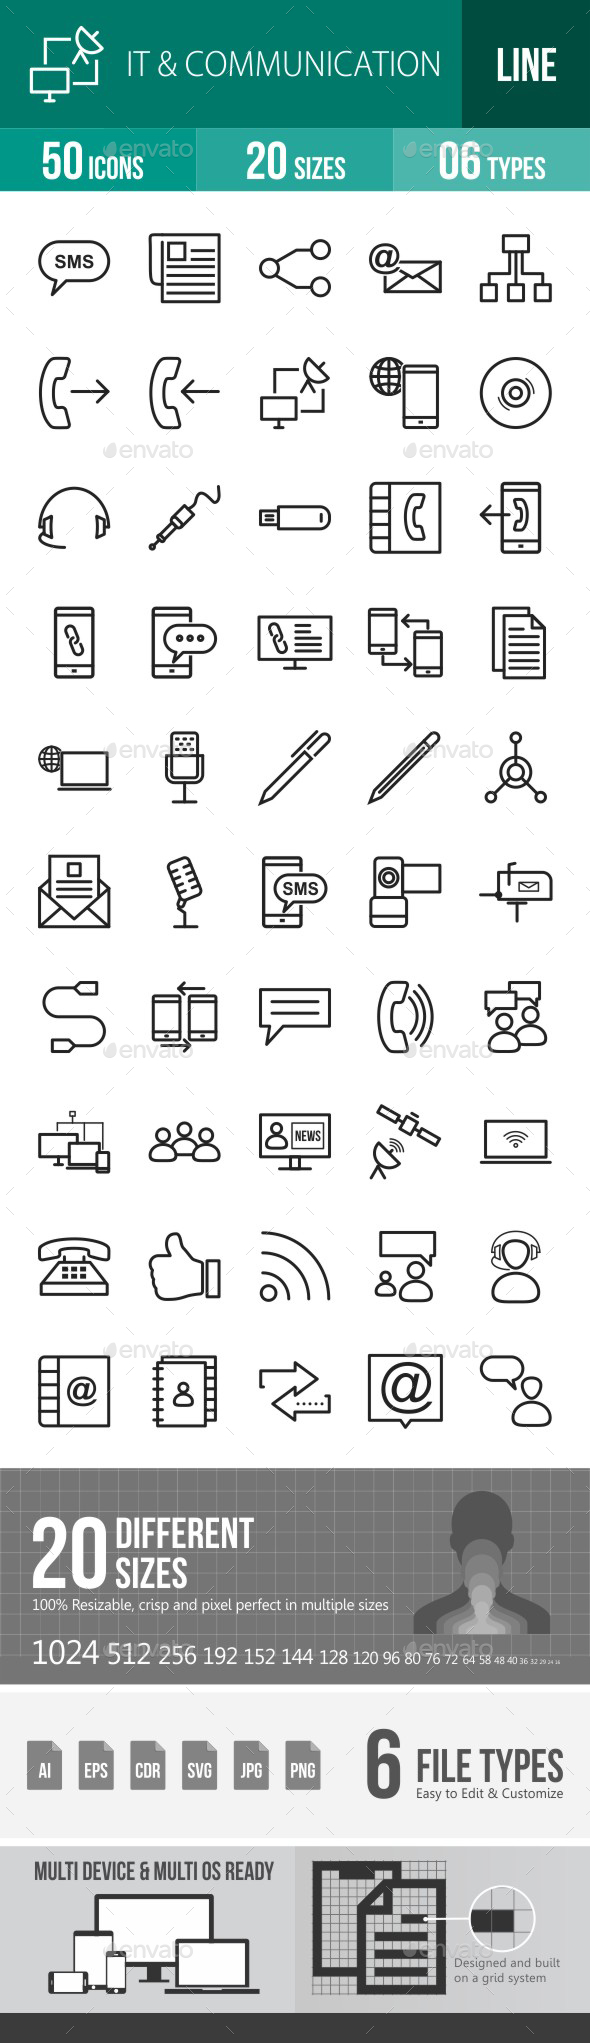 IT & Communication Line Icons